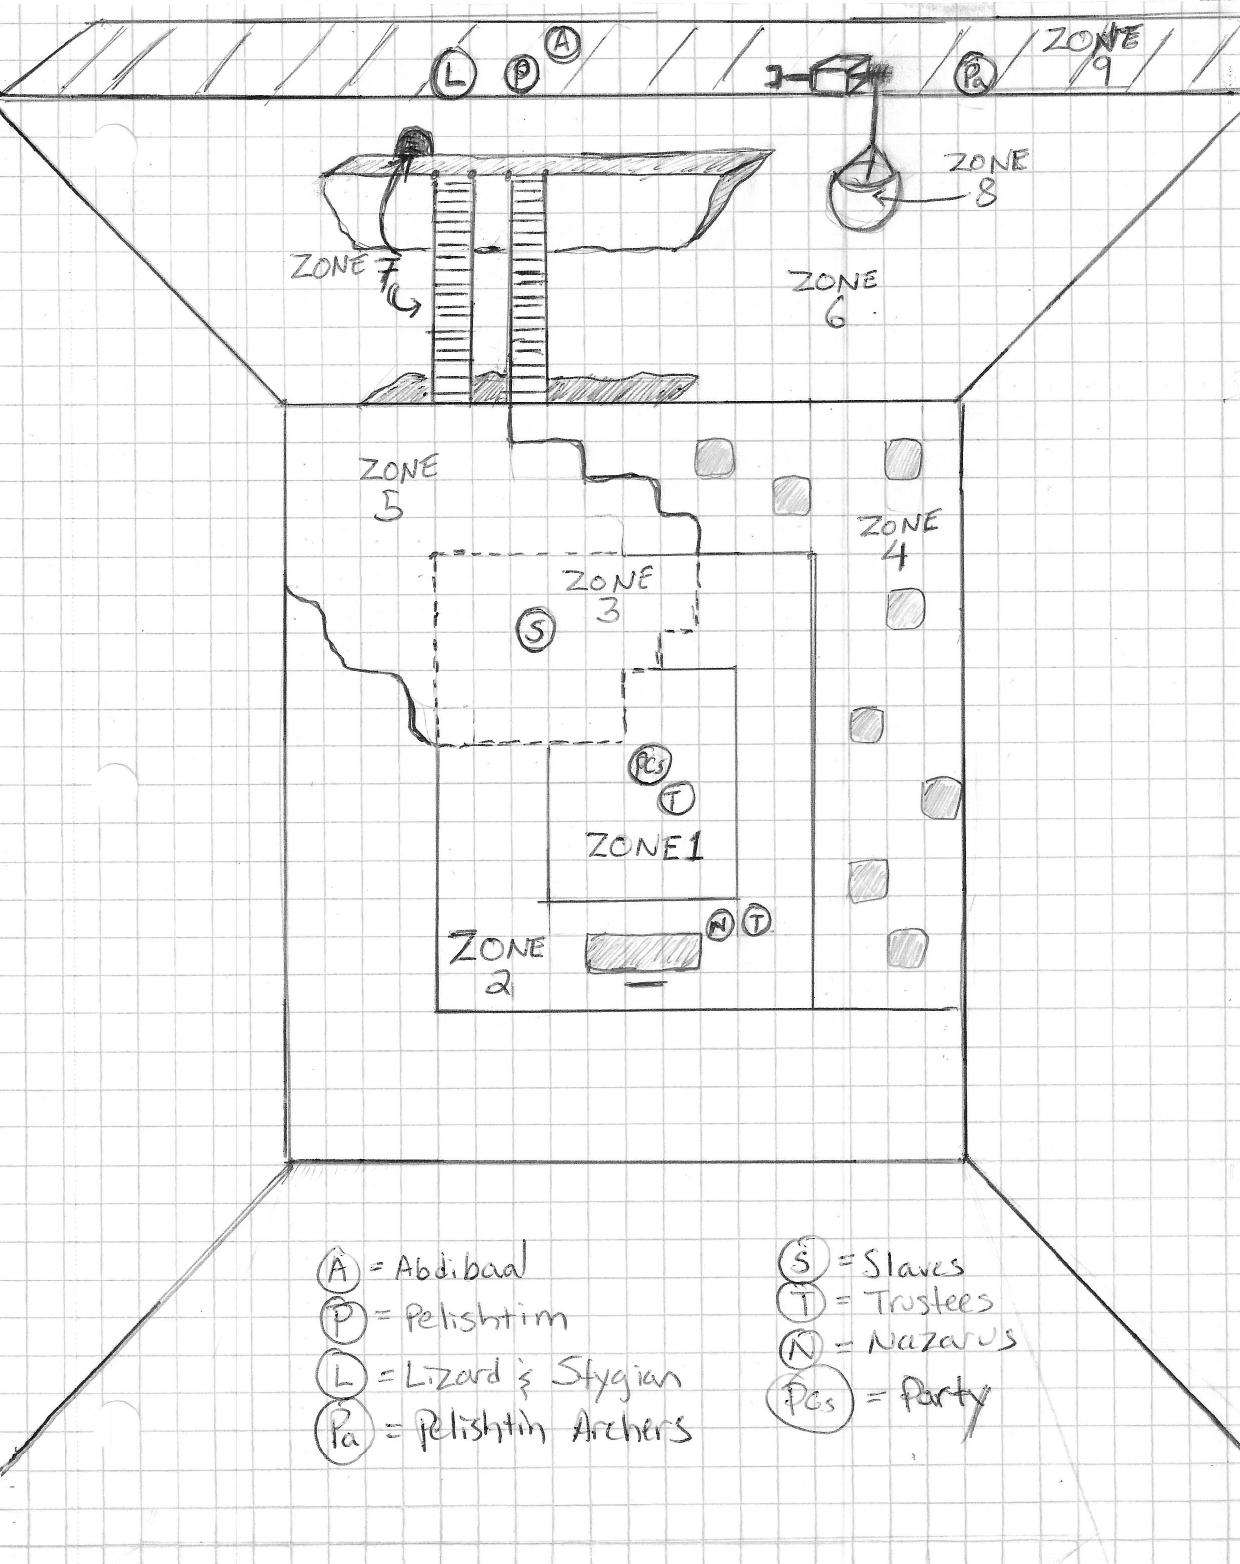 Conan Playtest Kit v1.1 Playtest Adventure The Red Pit Demo Map v4